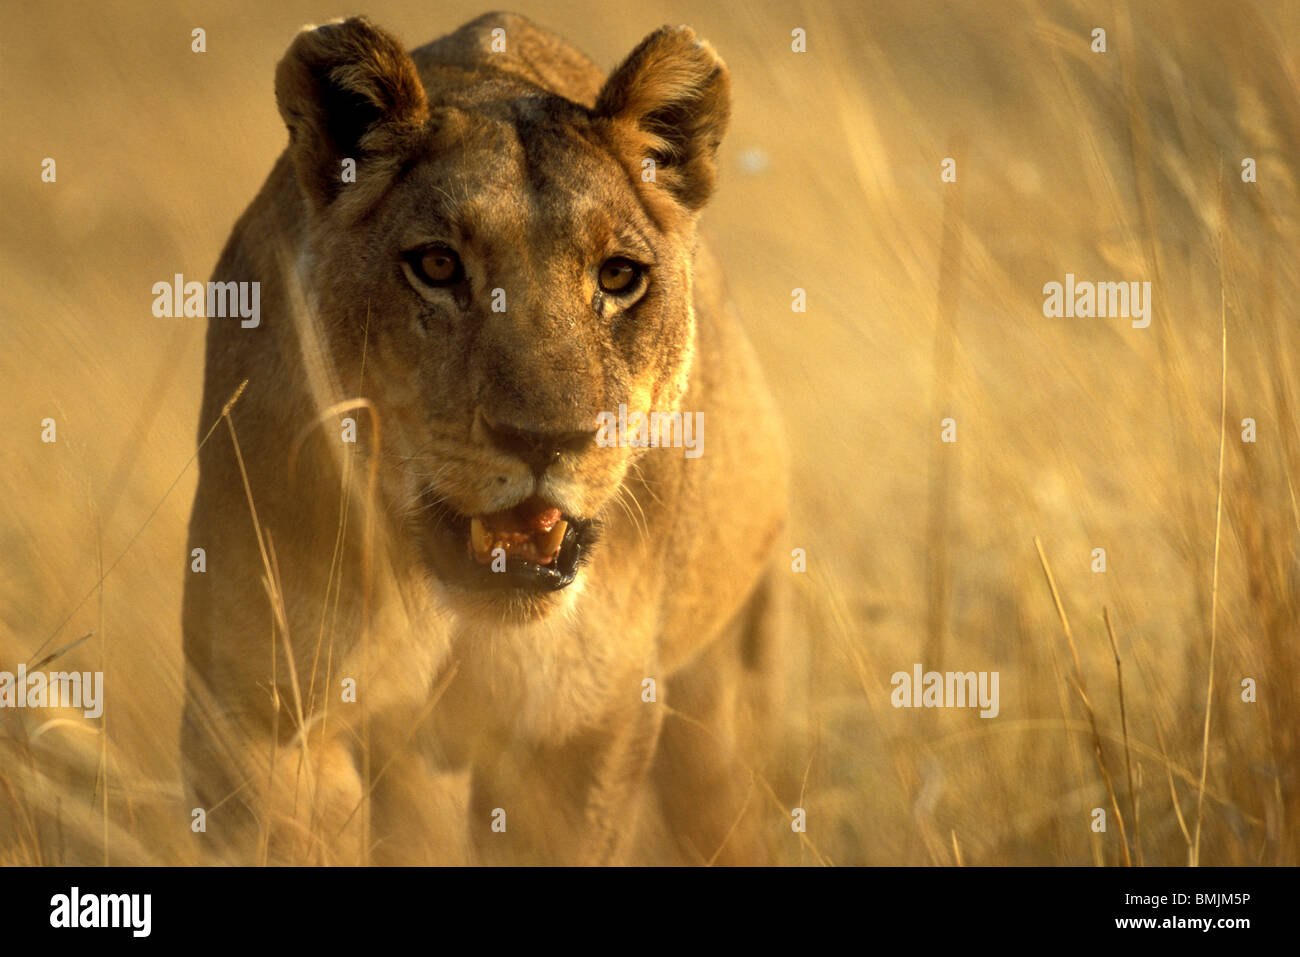 Africa, Botswana, Moremi Game Reserve, Lioness (Panthera leo) walking through tall grass near Xakanaxa Stock Photo